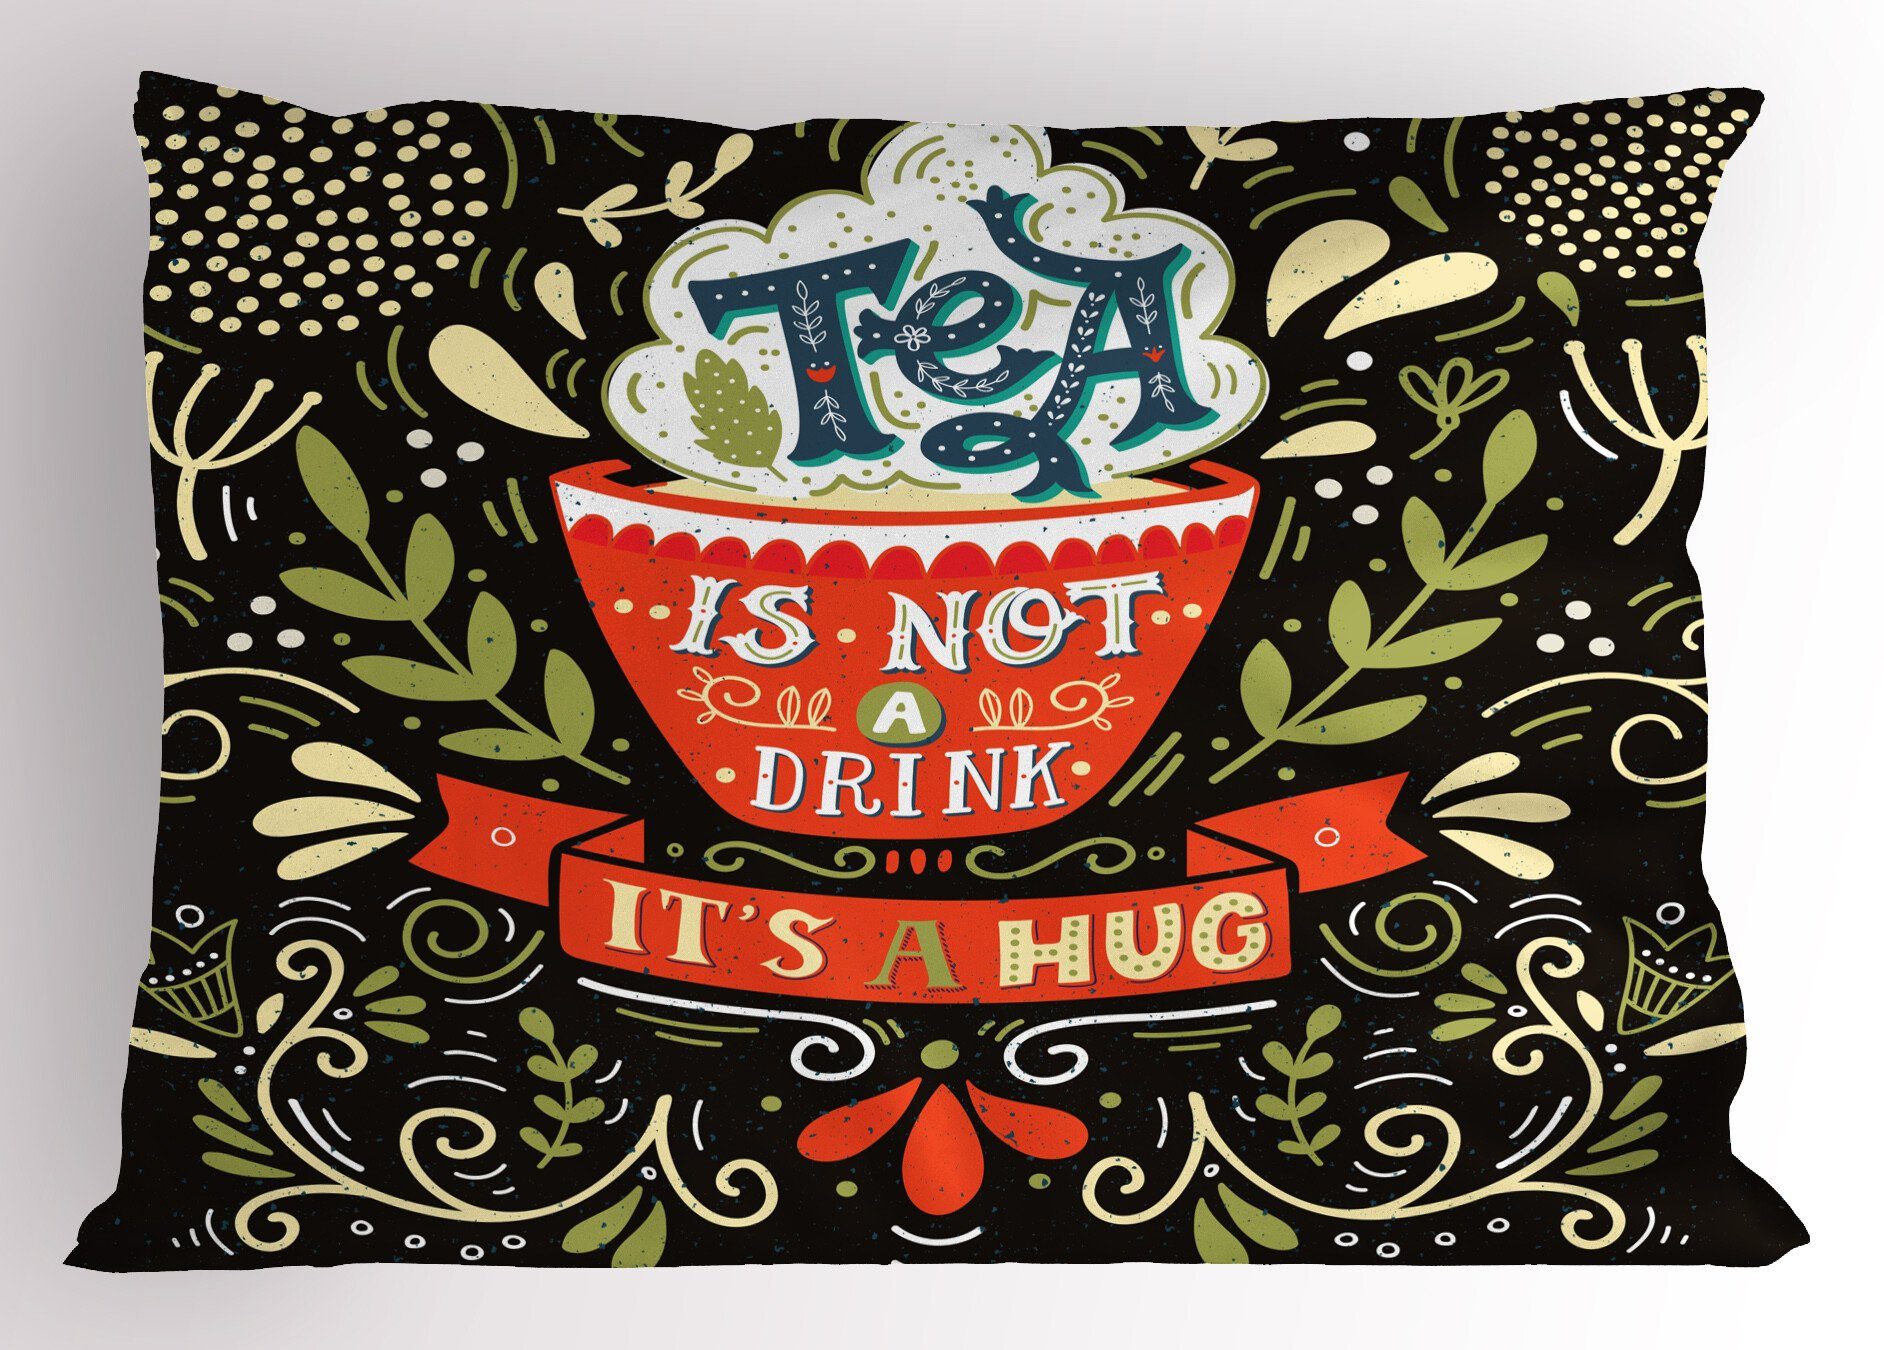 a Stück), Its Abakuhaus Getränk Gedruckter Size Hug (1 King Standard ein nicht Dekorativer Kissenbezüge Zitat Tee ist Kissenbezug,